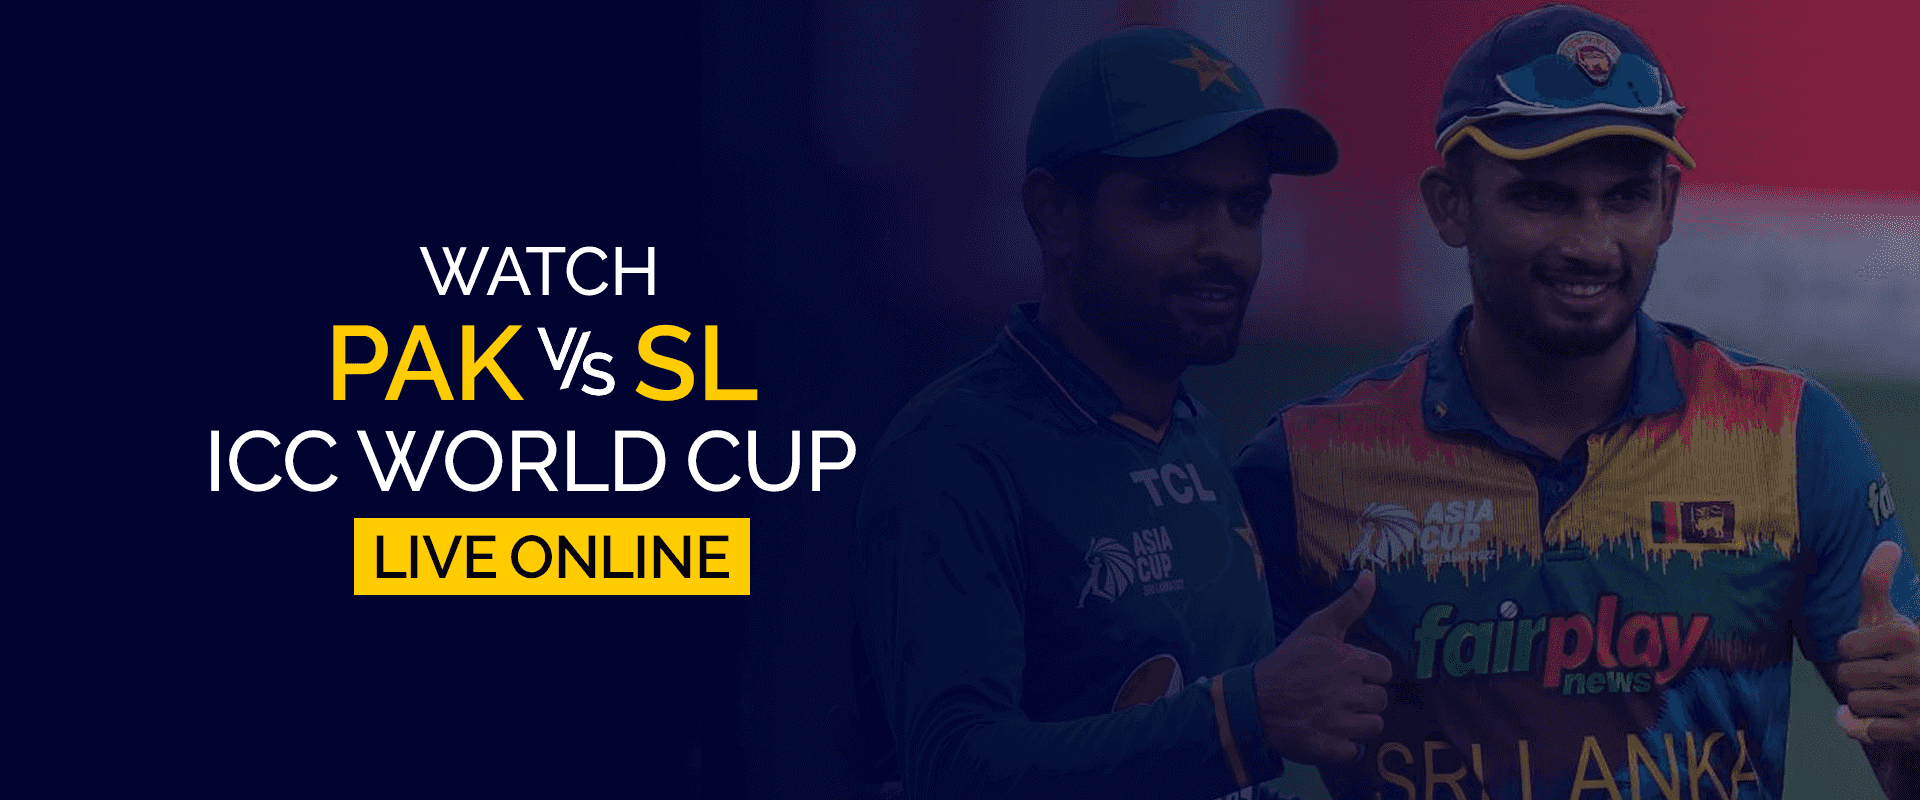 Watch PAK vs SL ICC World Cup Live Online